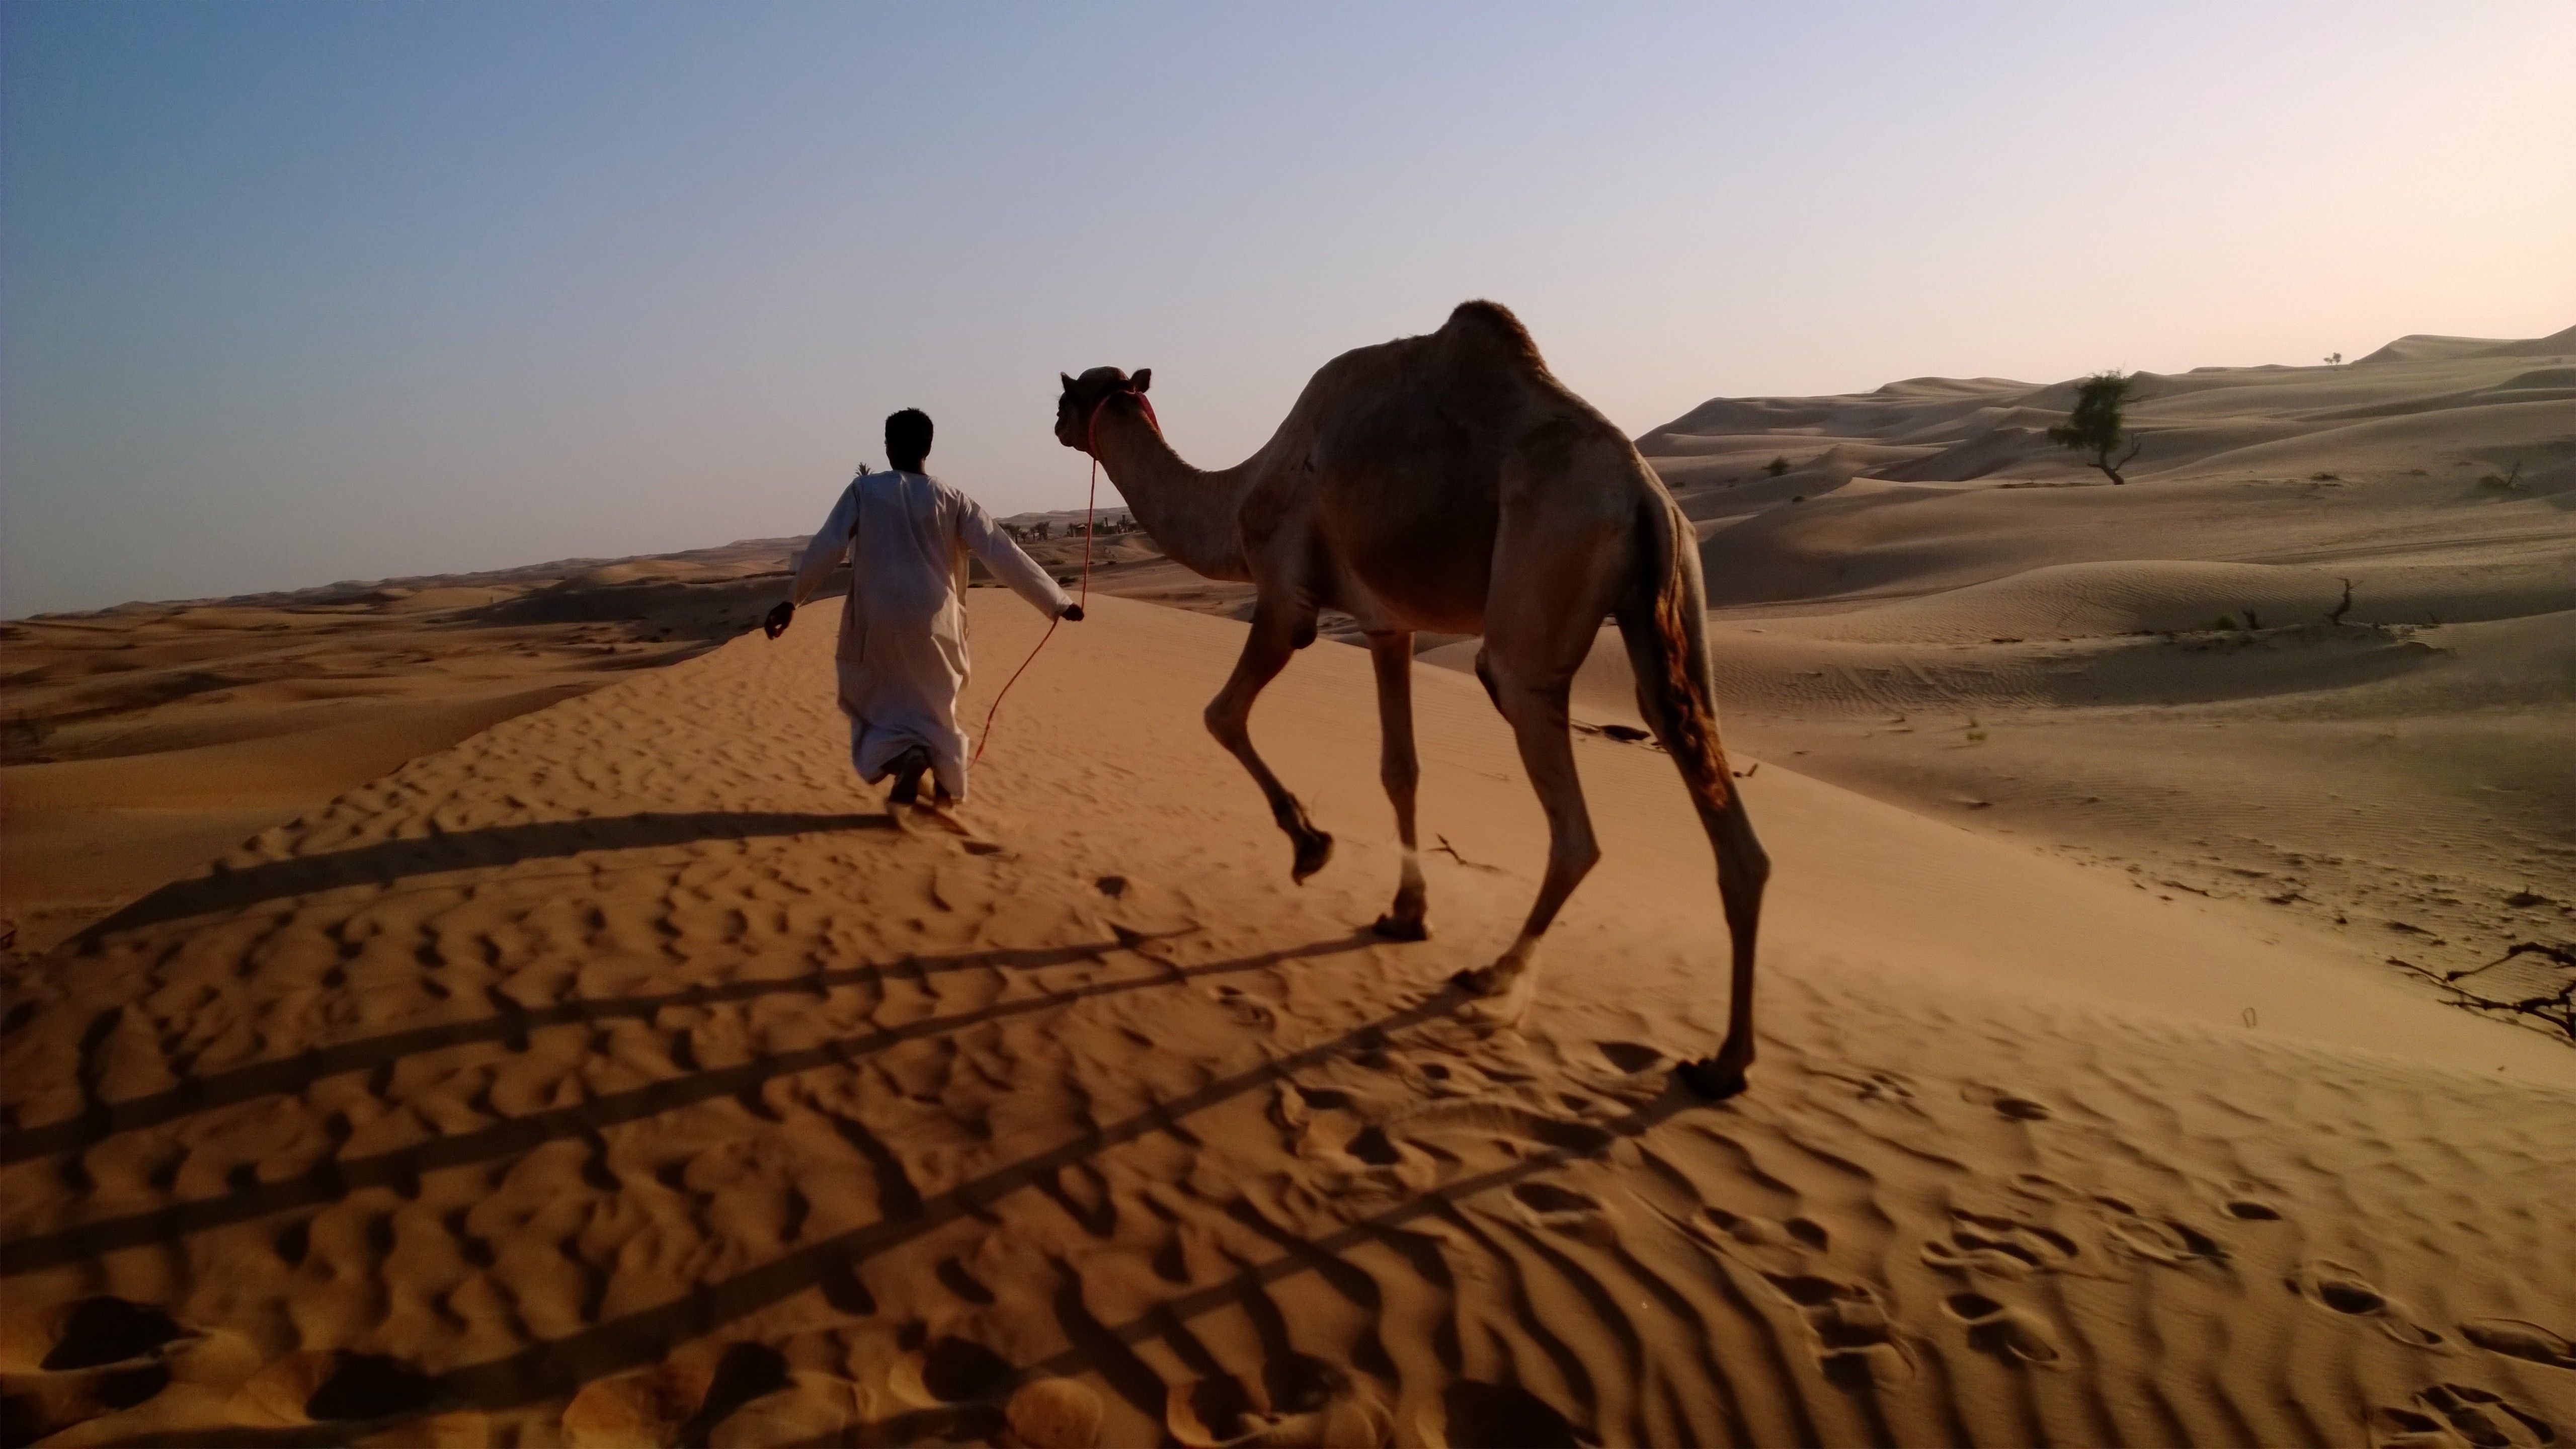 Wallpaper camel in desert, arabian caravan, Arabian Nights Village, Nokia Lumia test, Abu Dhabi tourism, Animals